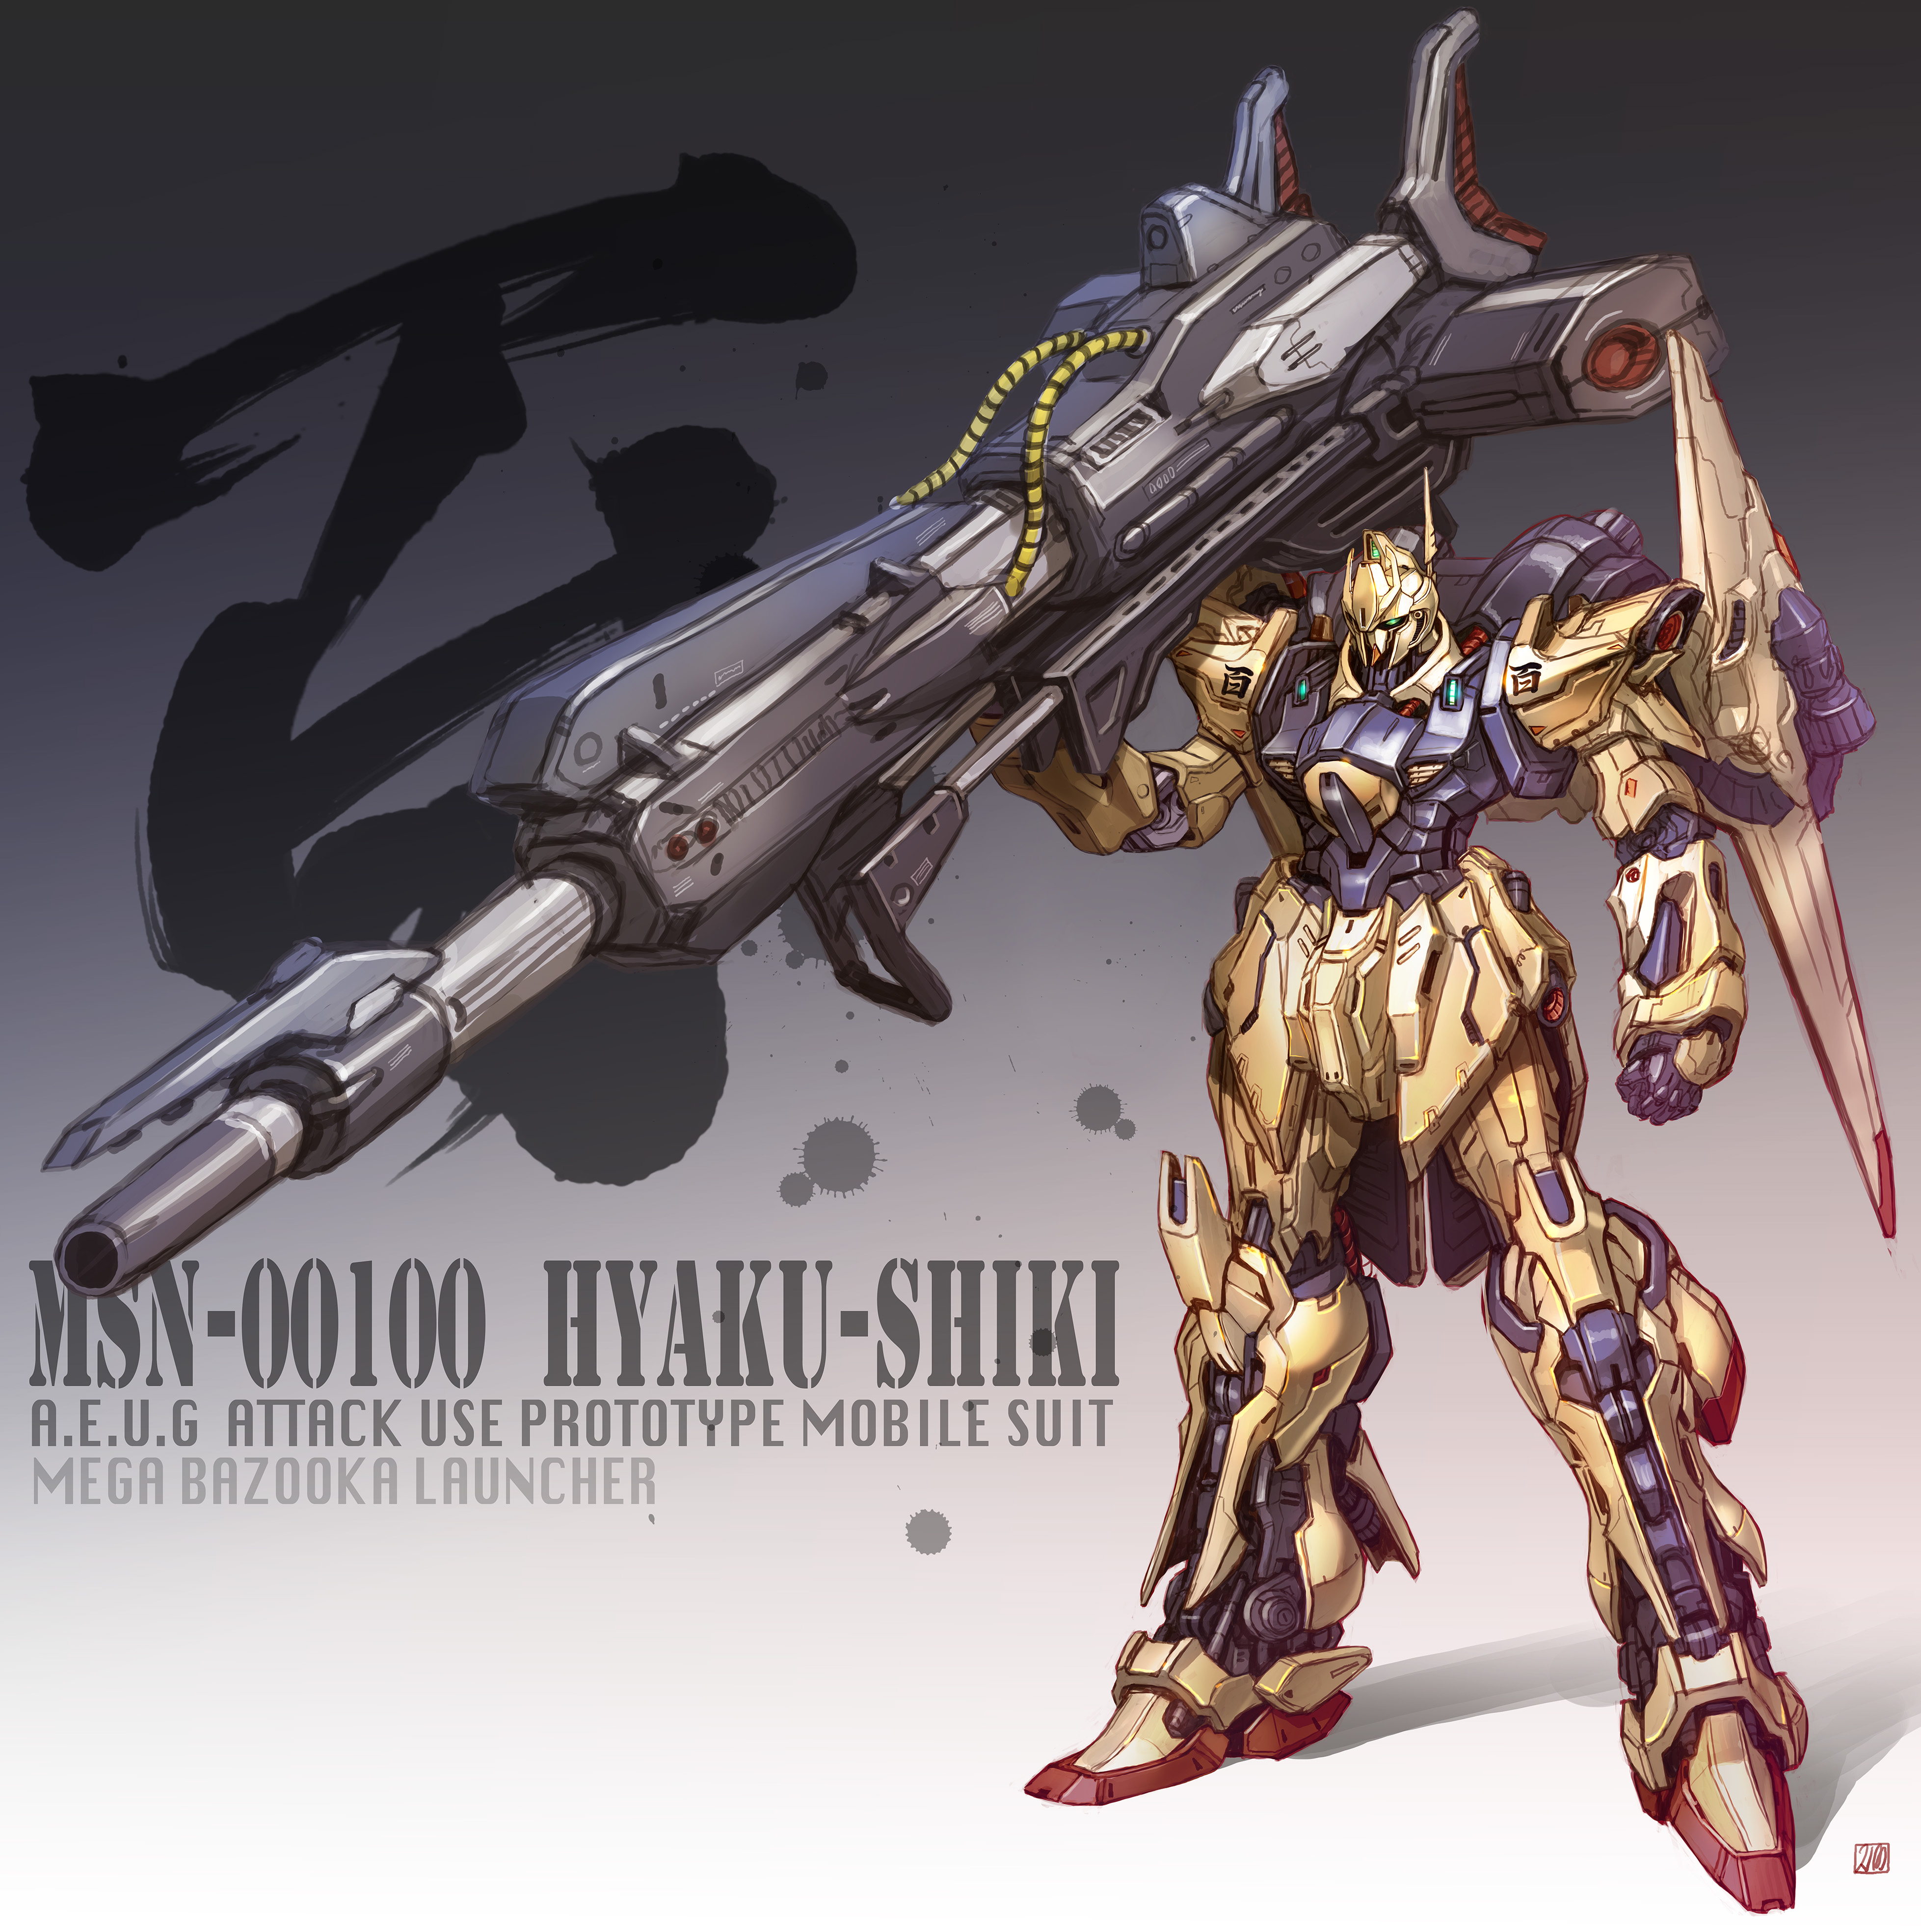 Anime Mechs Super Robot Wars Mobile Suit Zeta Gundam Hyaku Shiki Mobile Suit Artwork Digital Art Fan 3914x3937